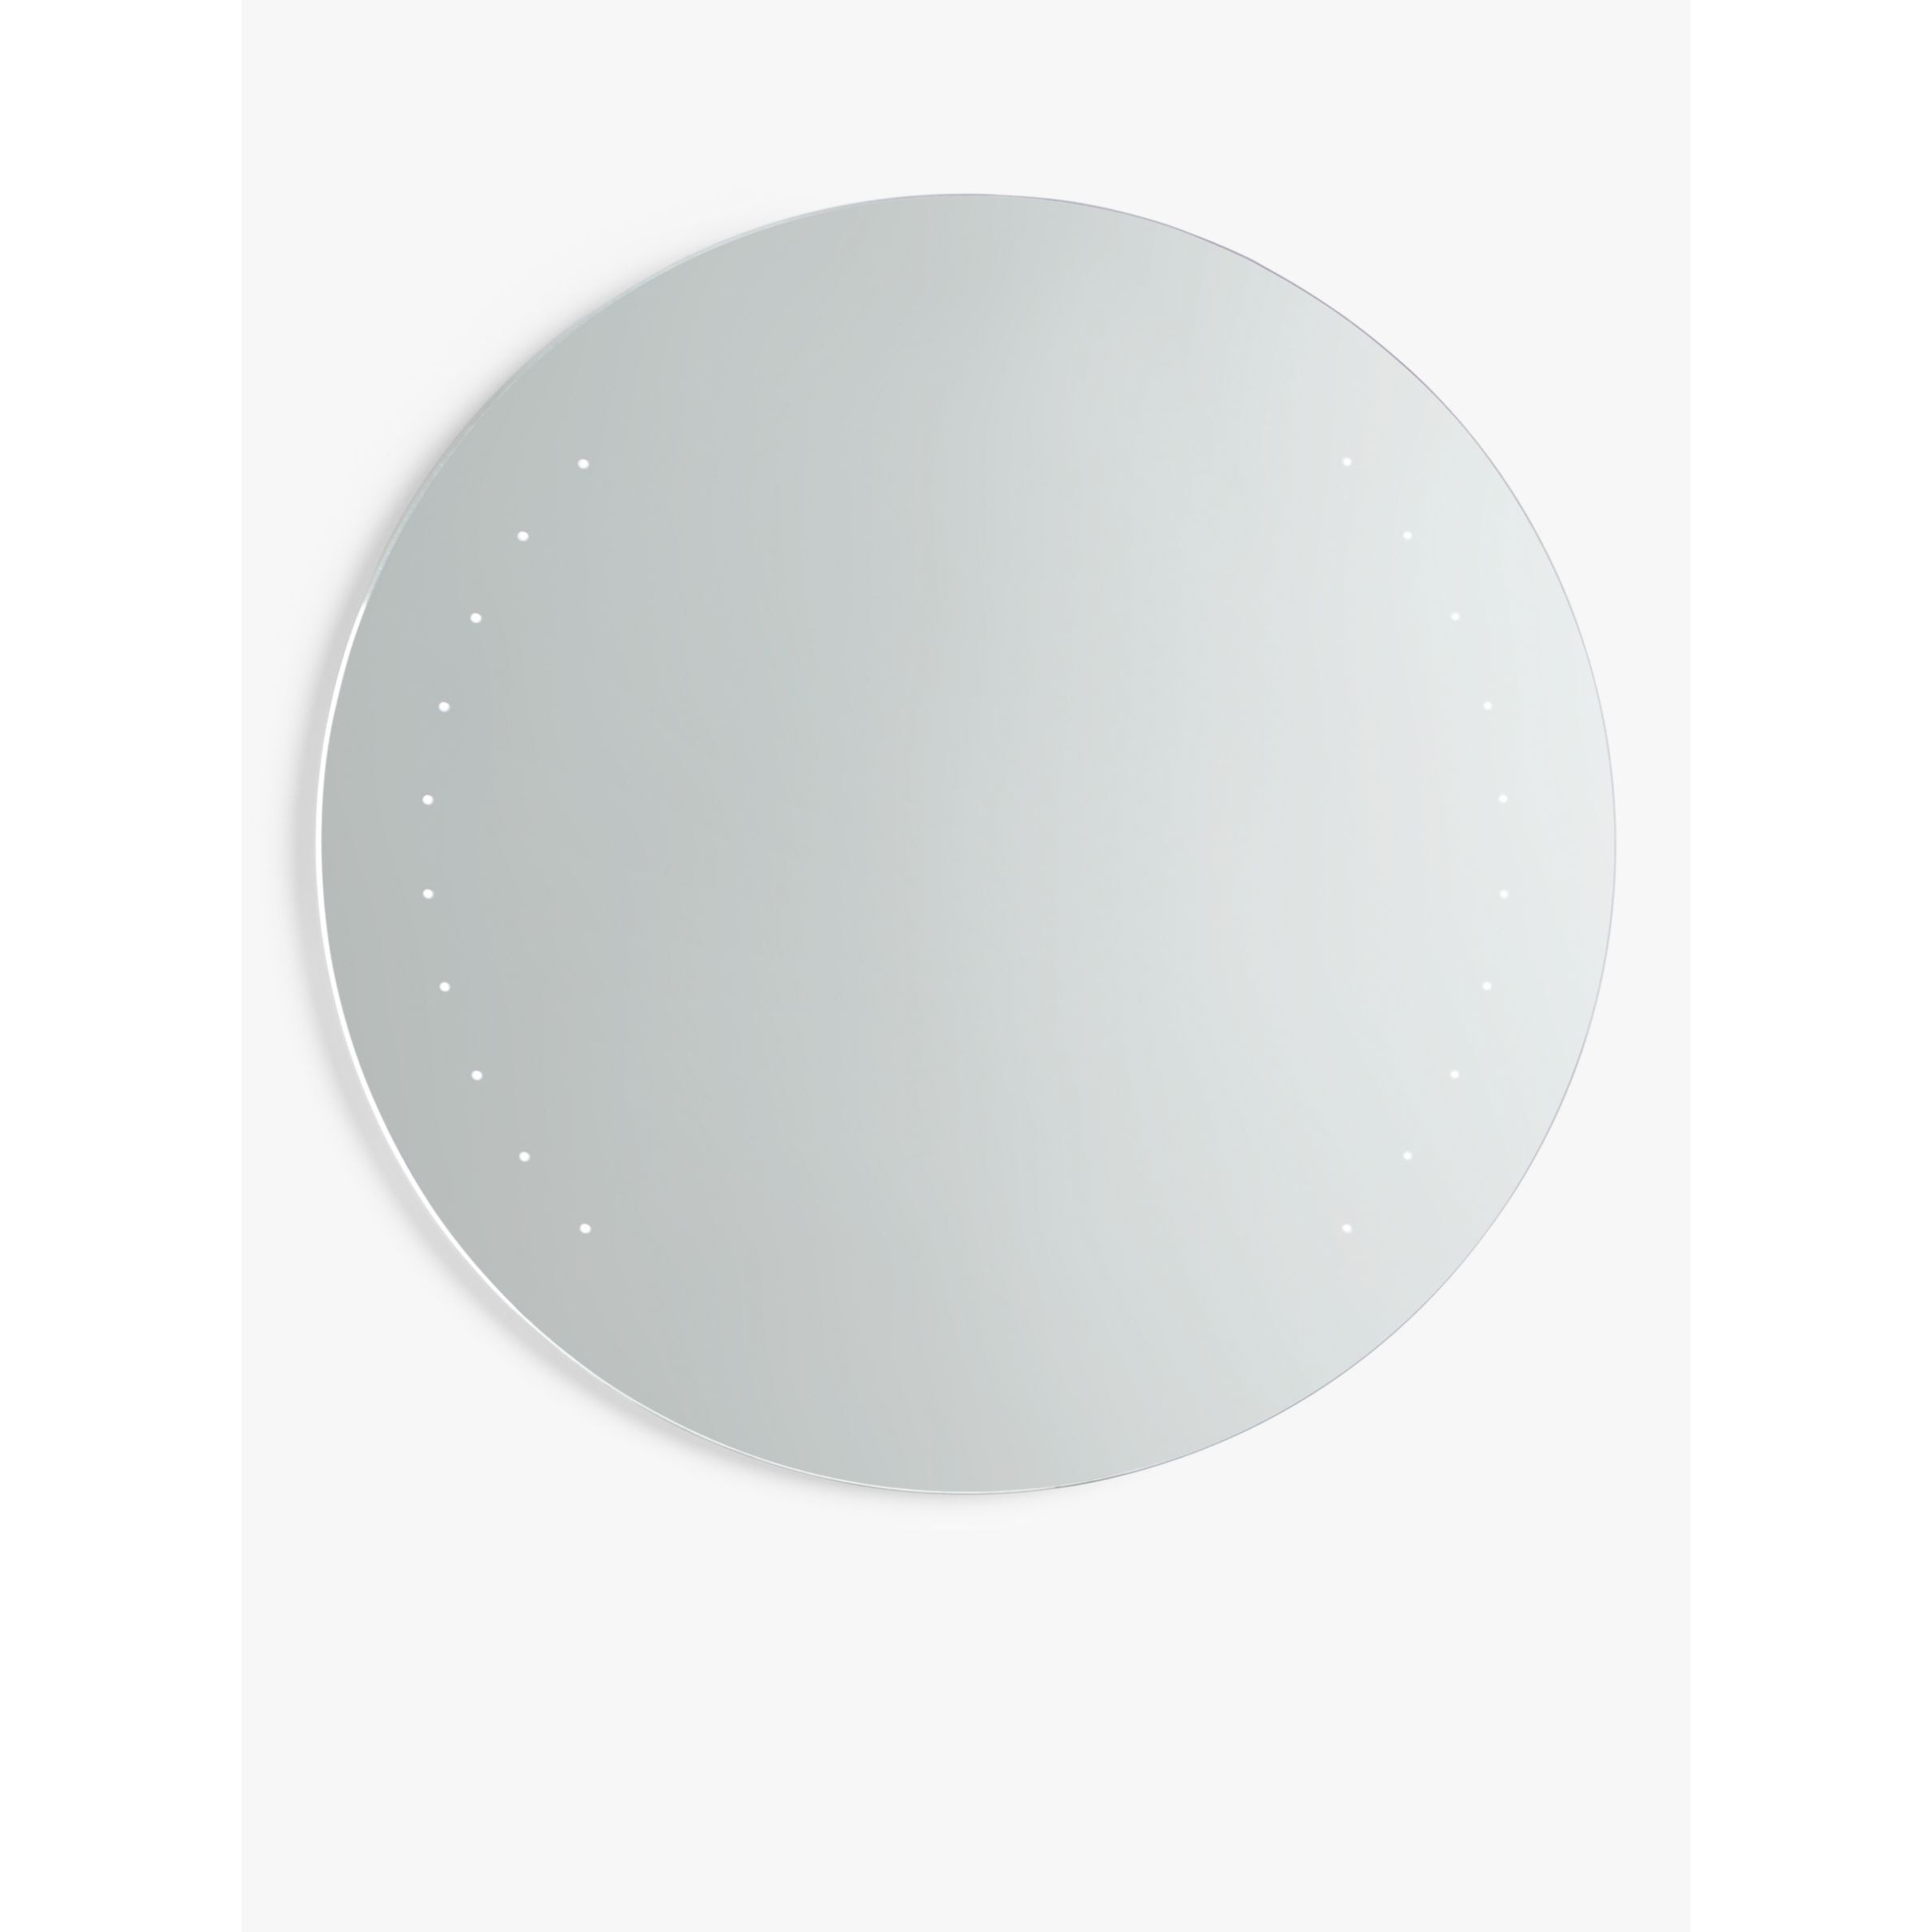 John Lewis & Partners Pixel Wall Mounted Illuminated Bathroom Mirror, Round